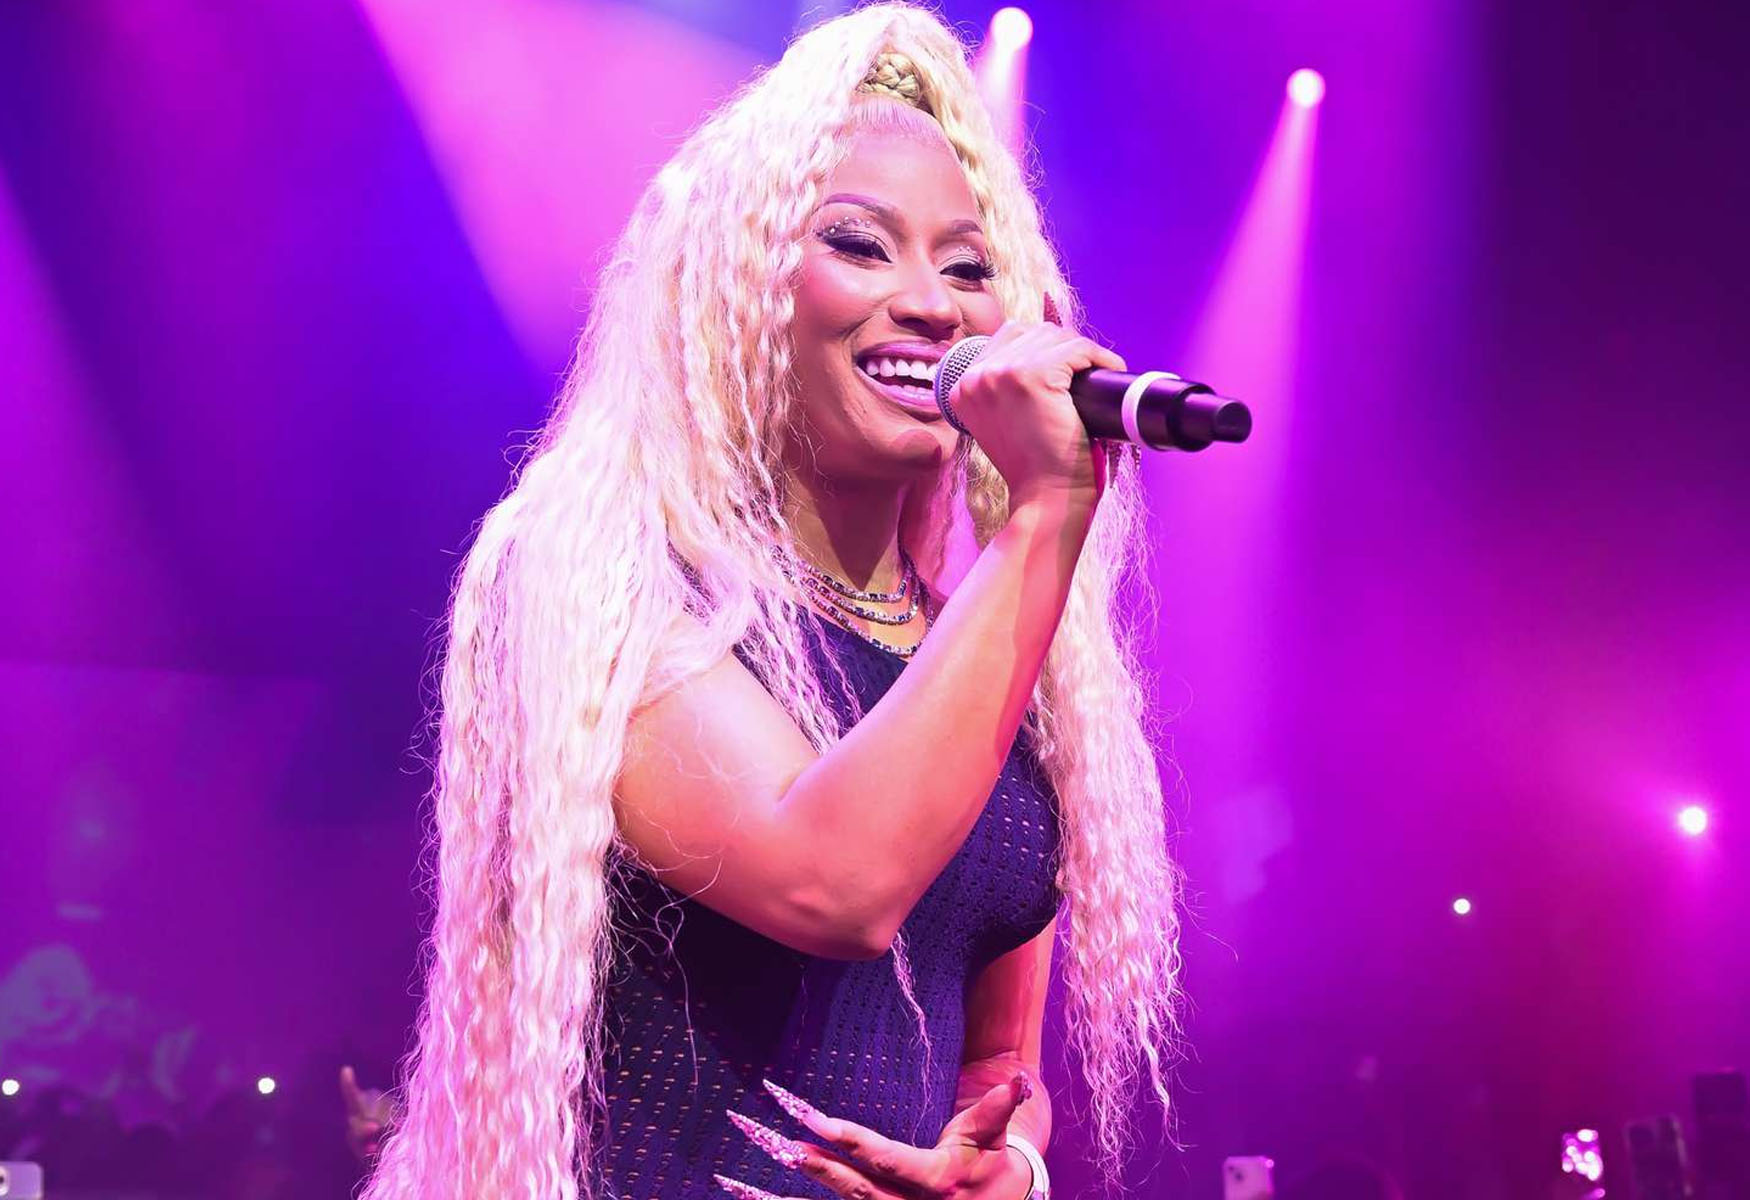 Nicki Minaj Refuses To Perform ‘Starships’ At NYE Event, Citing Dislike For The Song